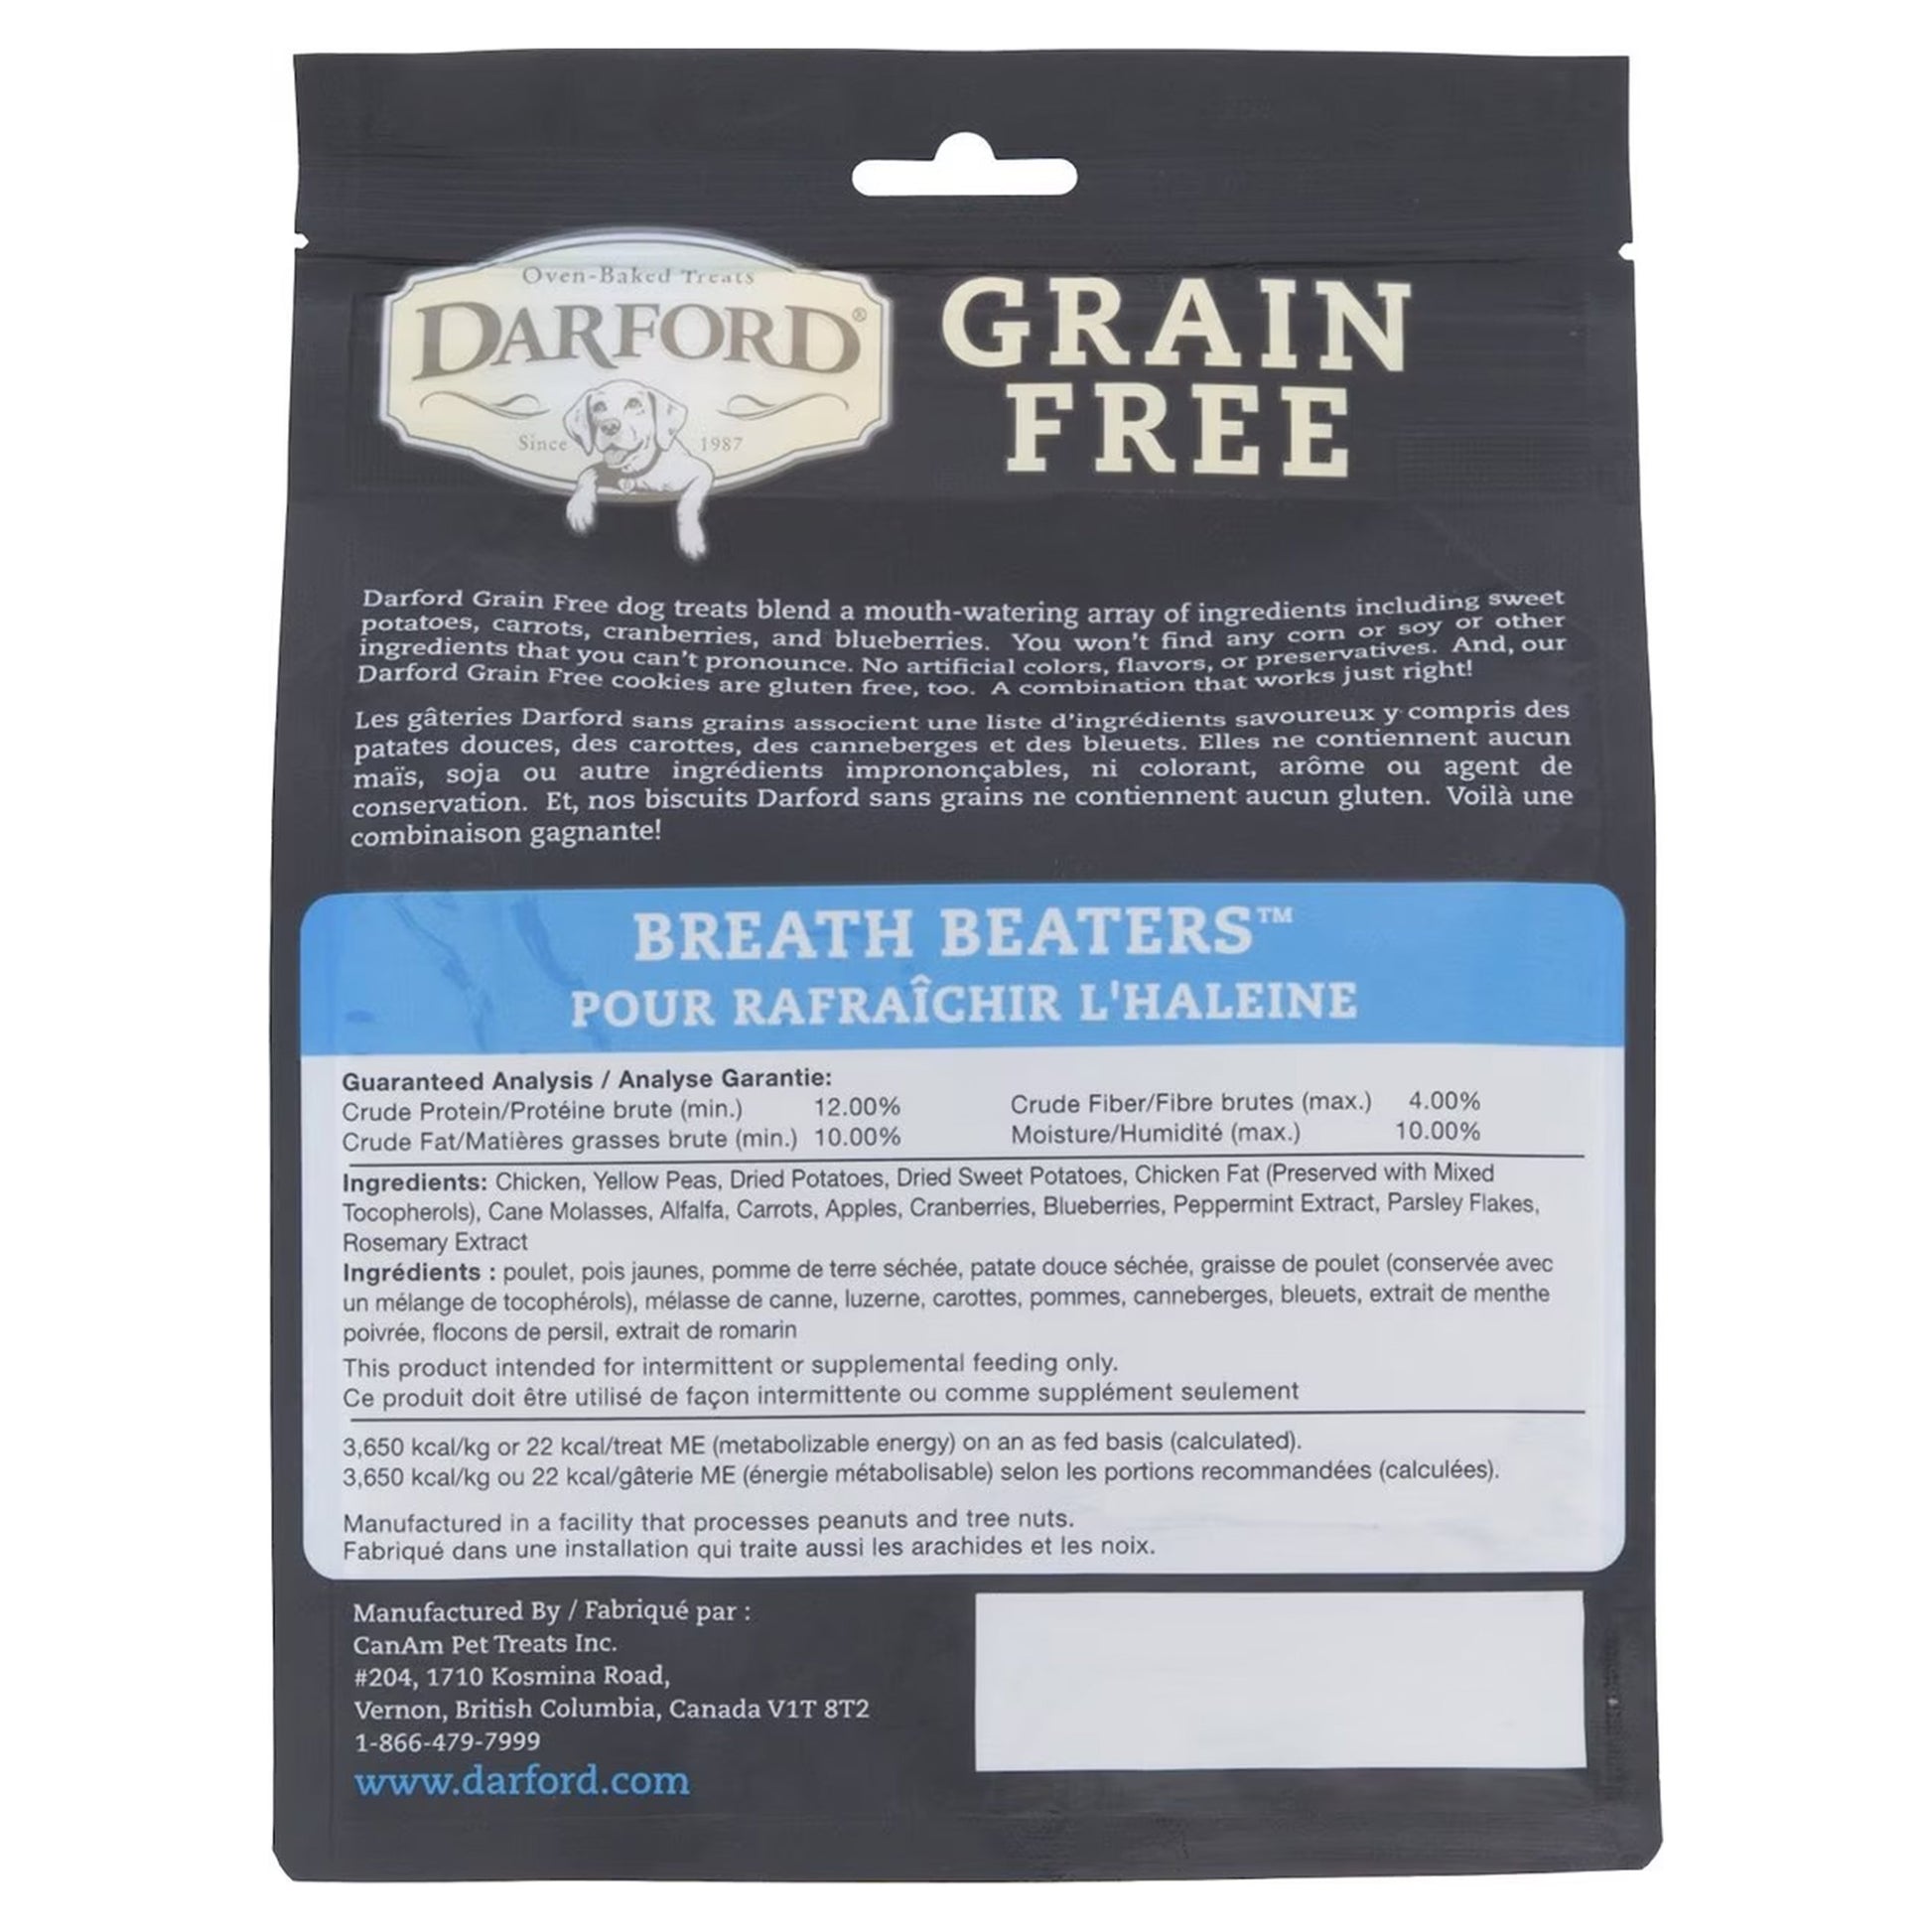 Darford Grain Free Dog Biscuits Breath Beaters Regular, Breath Beaters, 12 oz, Darford